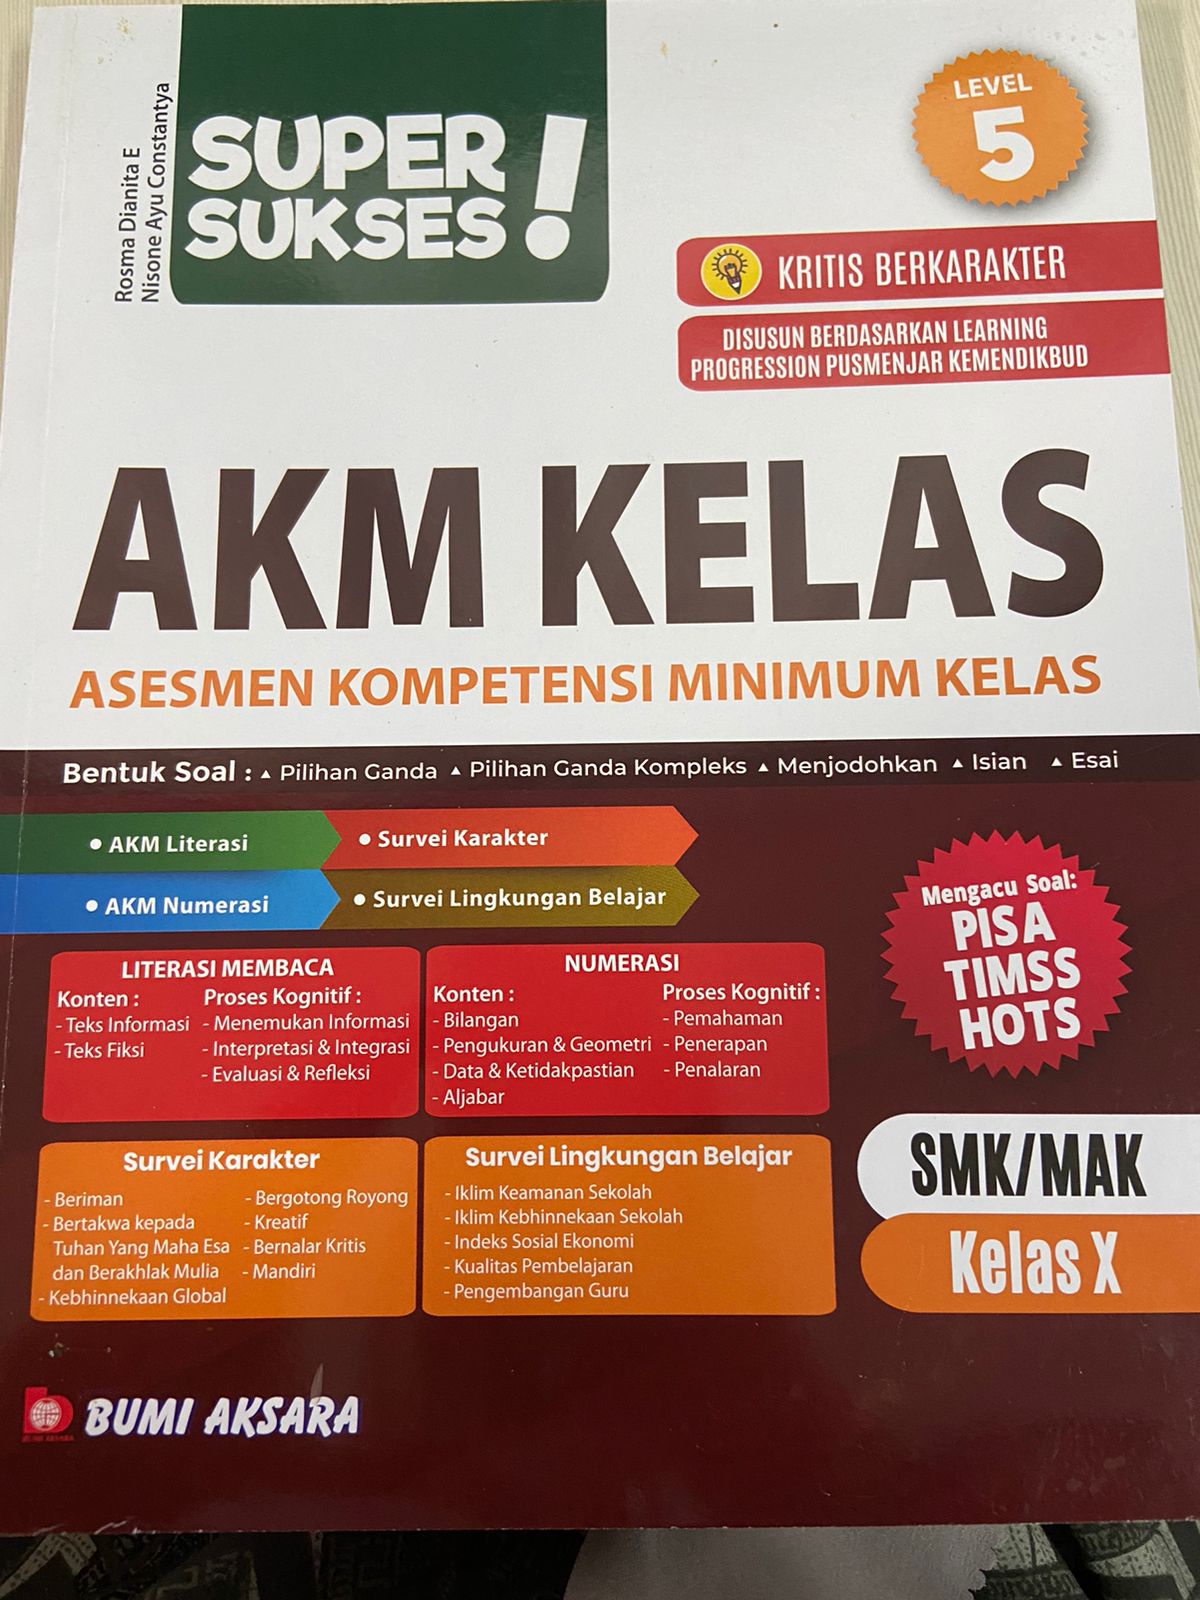 Super Sukses! AKM: Asesmen Kompetensi Minimum Kelas Level 5, SMA/MAK Kelas X